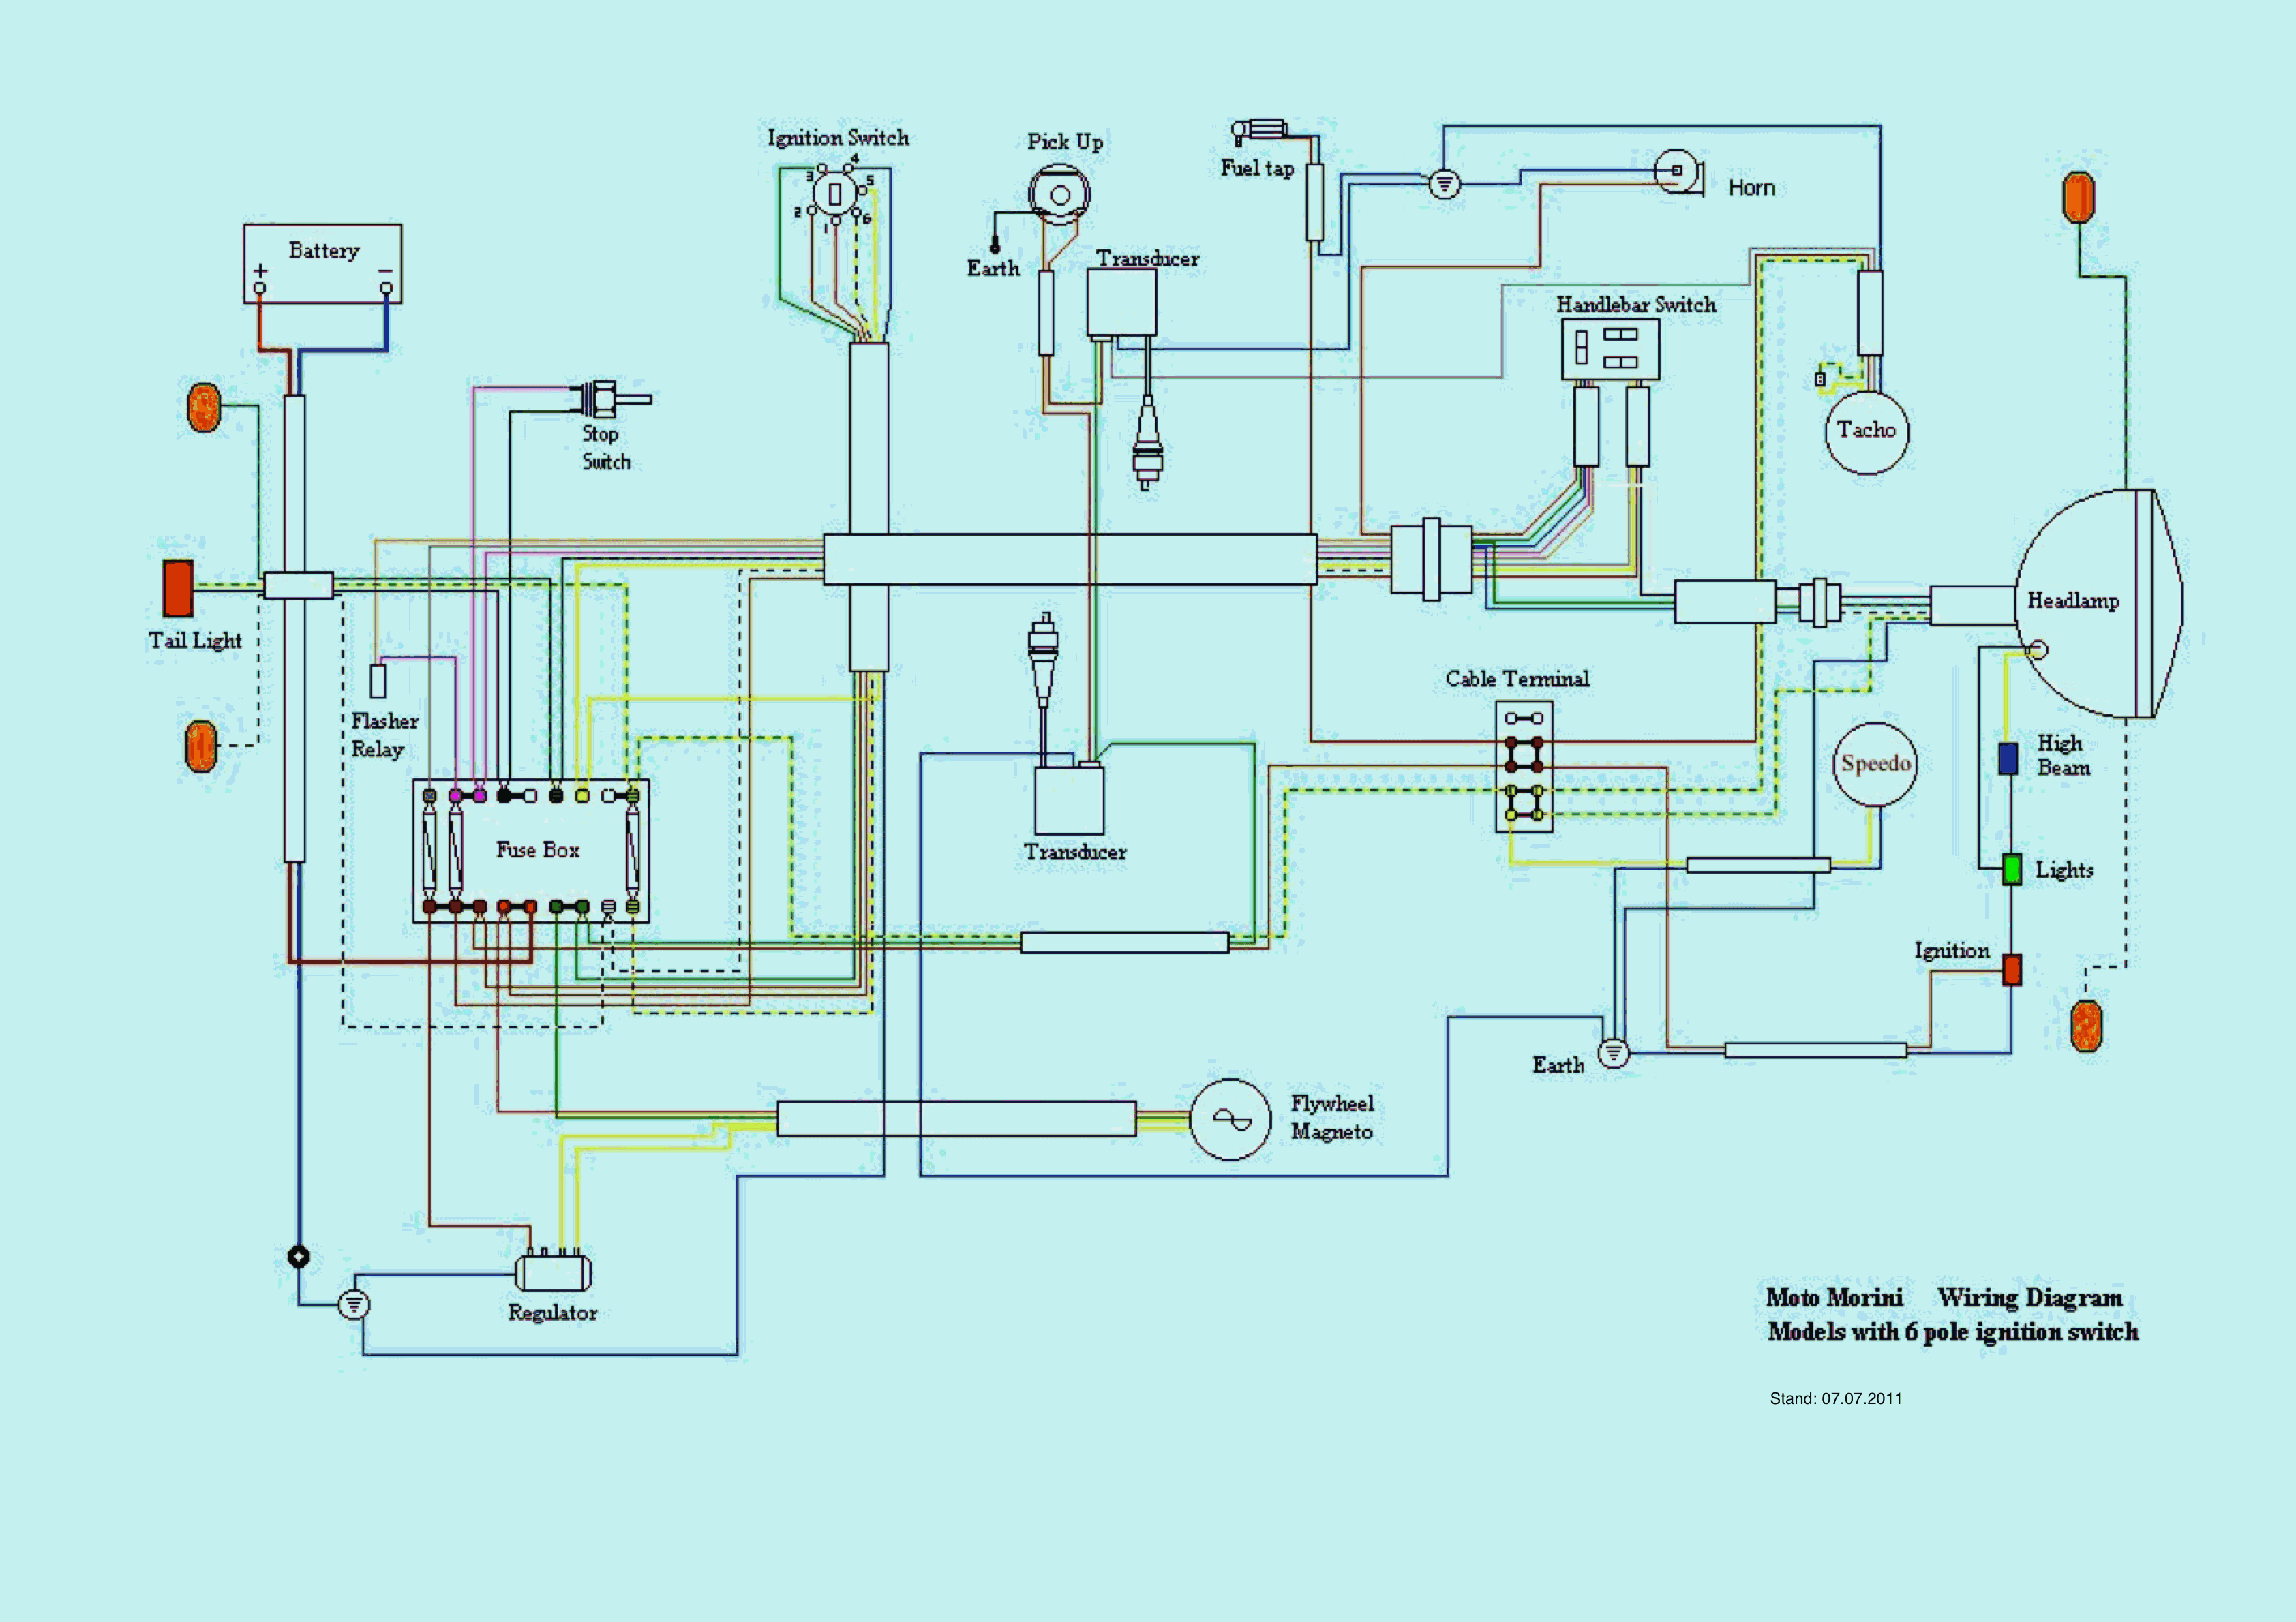 Links [www.hofmann-andi.de] kawasaki 100 wiring diagram 